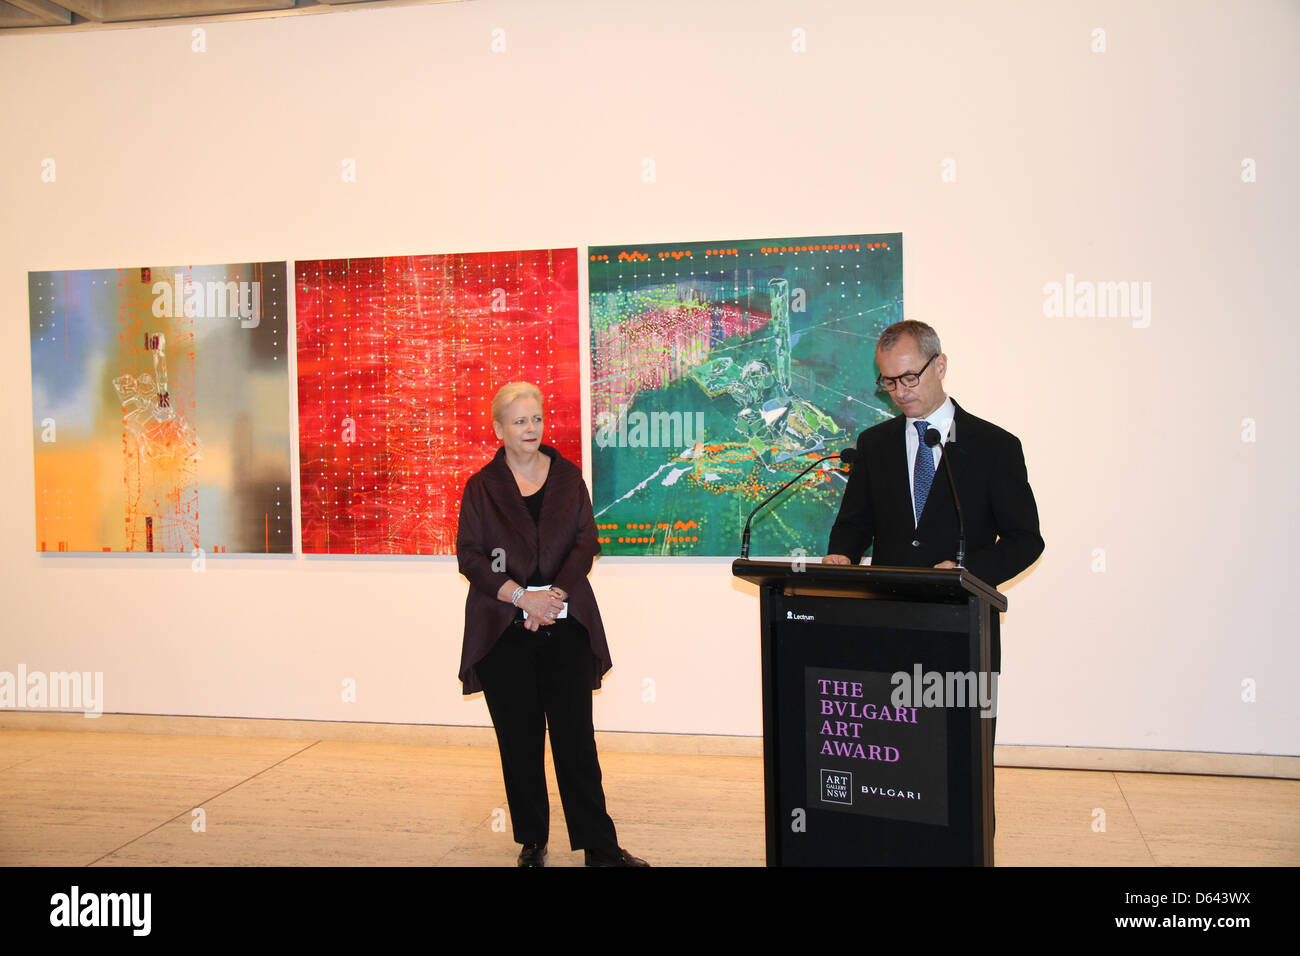 bulgari art award australia